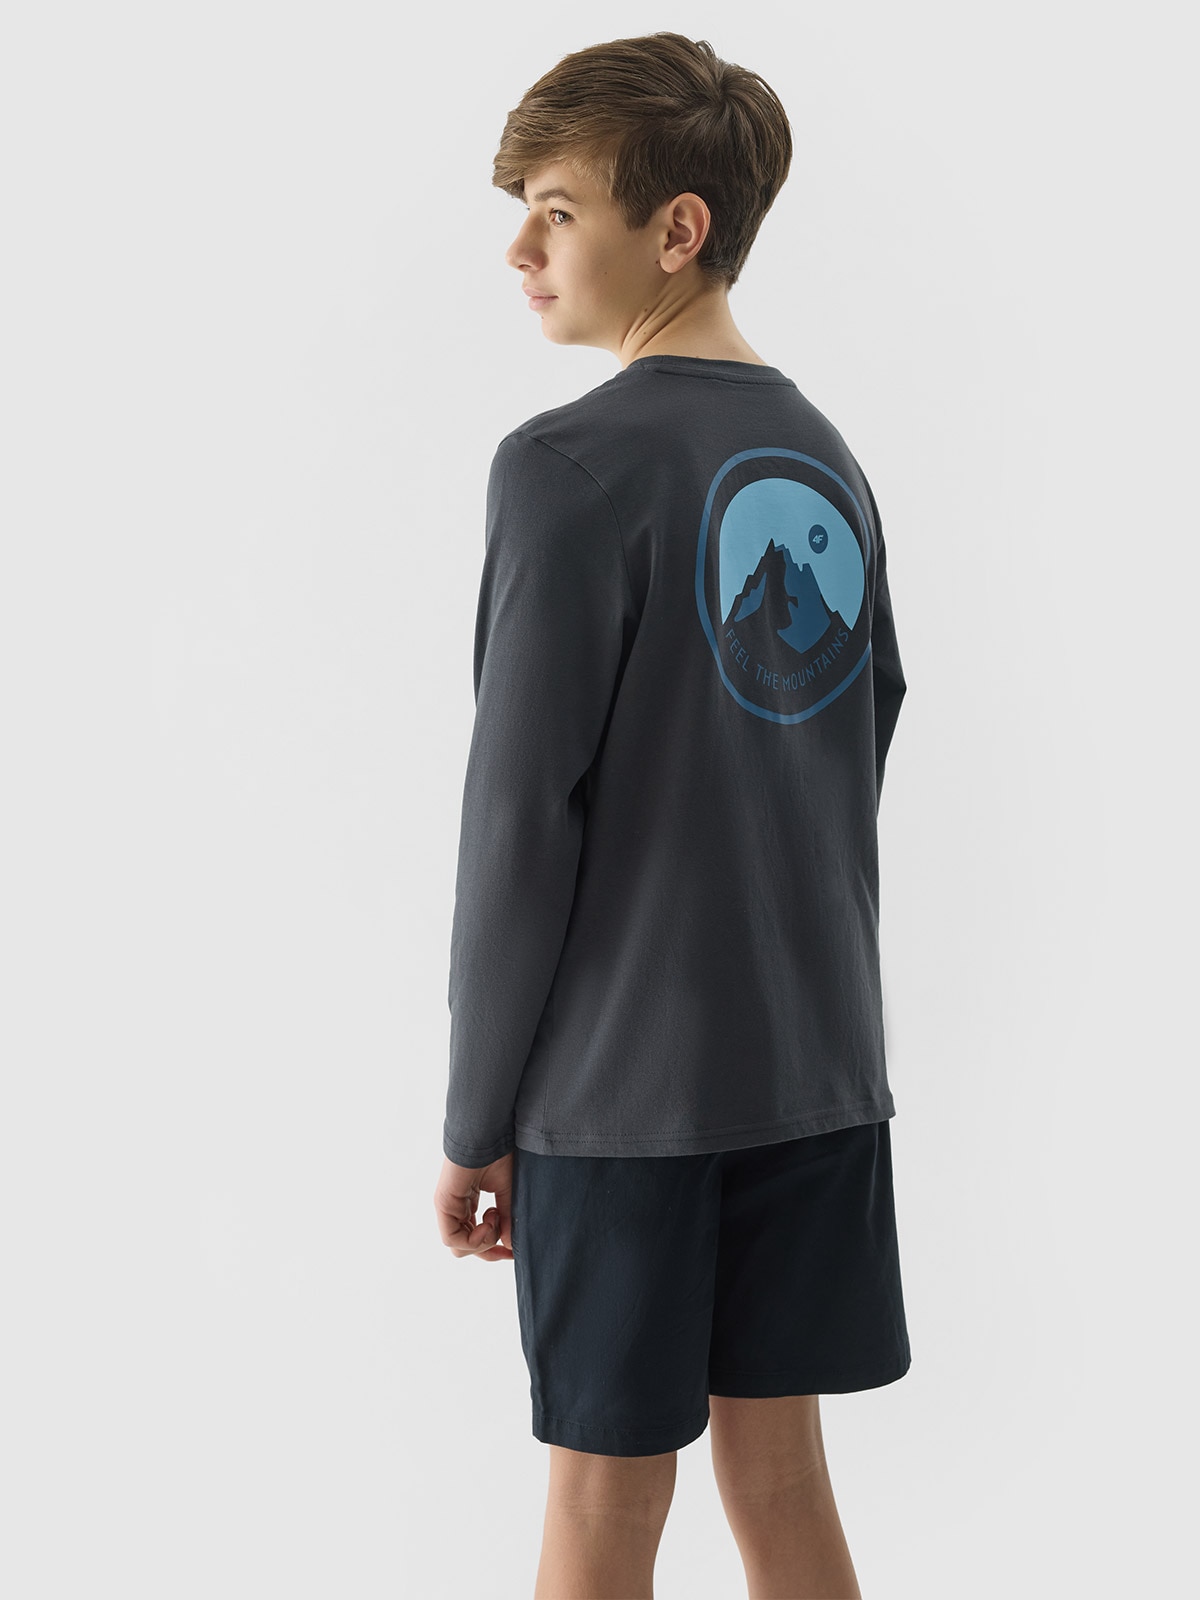 Chlapecké tričko s dlouhými rukávy z organické bavlny s potiskem - grafitové